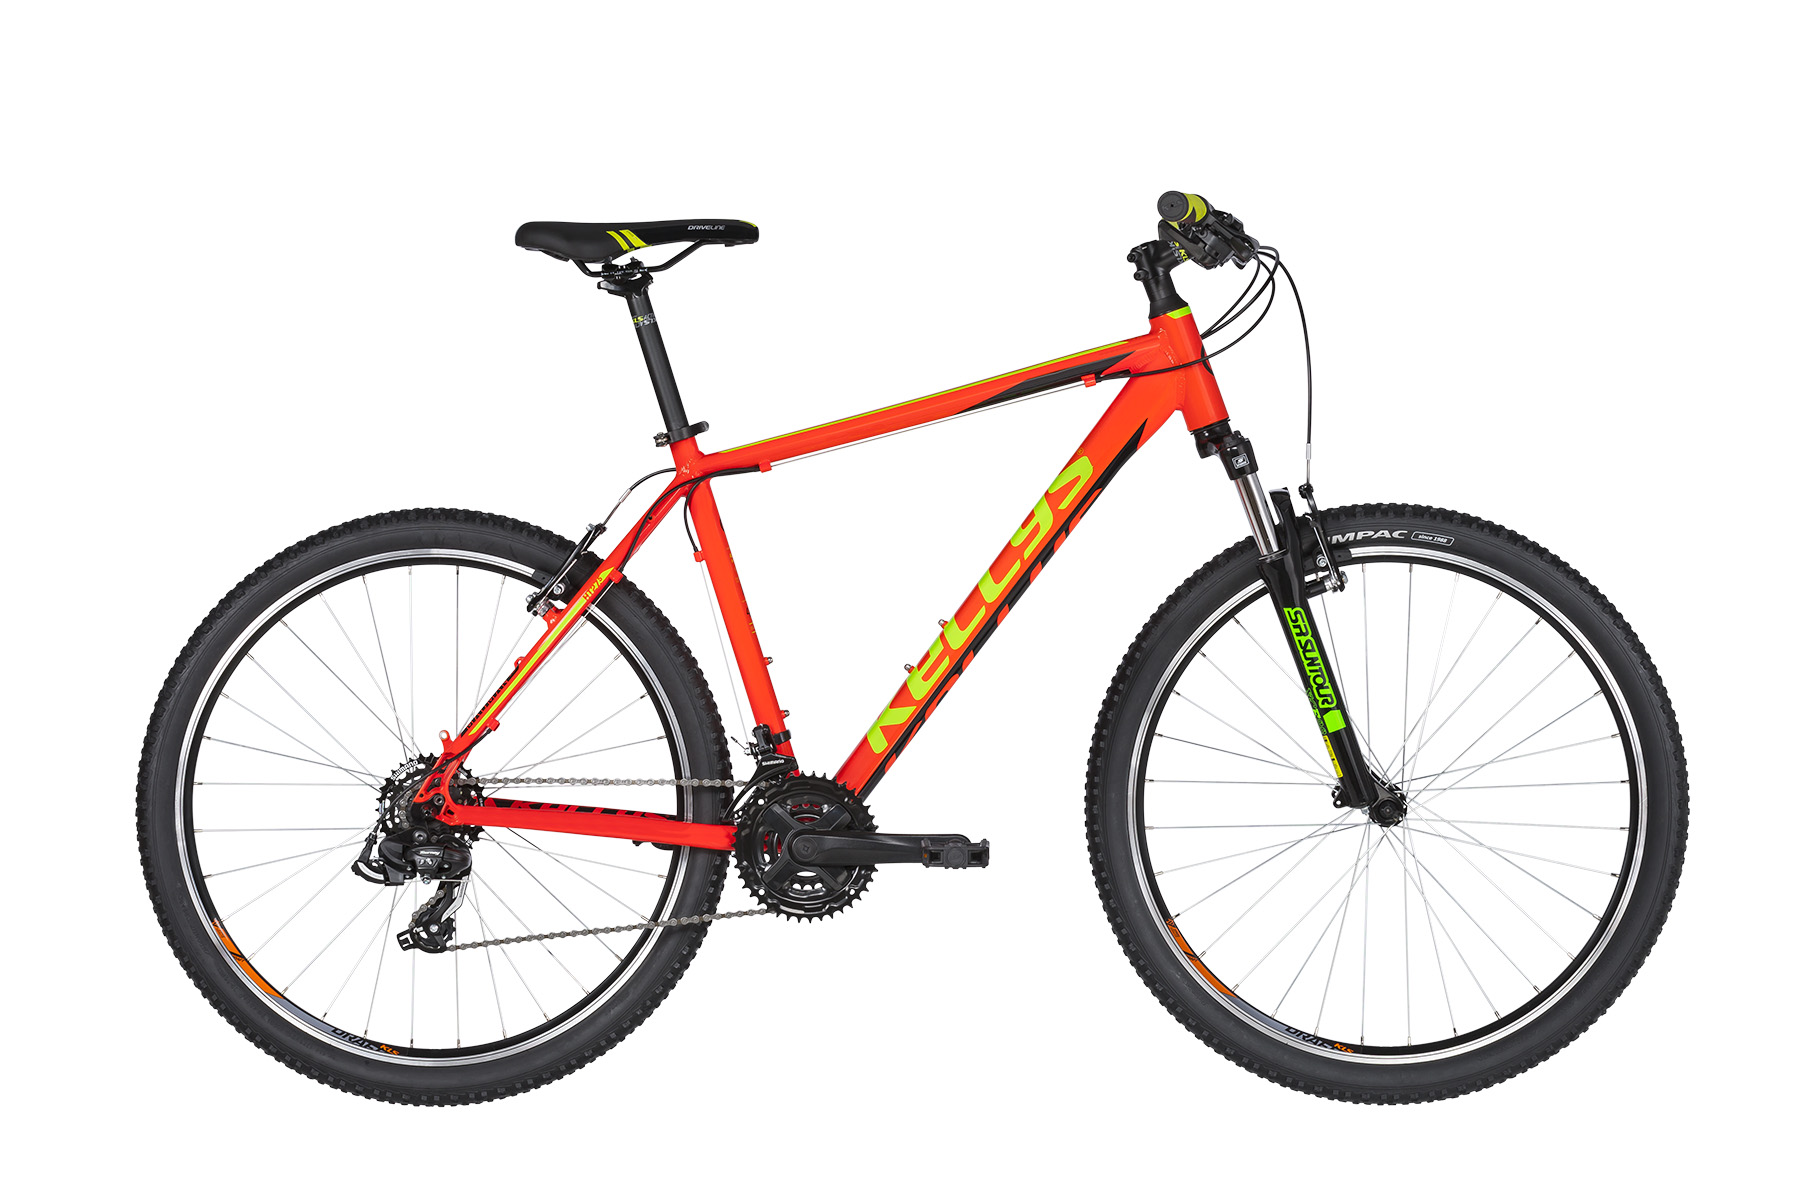 <strong>Bicicleta MTB hardtail&nbsp;</strong>cu roti de 26" cu cadru mic S.</p><p><strong>Bicicleta de munte&nbsp;</strong>cu echipare Shimano si 2 ani garantie in magazinul Doua Roti.</p><p><strong>Cadru:&nbsp;</strong>KELLYS Alutec RRC 26 - Race Ready Concept<br /><strong>Marime Cadru:&nbsp;</strong>345mm (XXS) / 395mm (XS) / 445mm (S)<br /><strong>Furca:</strong>&nbsp;SR SUNTOUR XCE (26), 80mm, coil spring<br /><strong>Set Cuveta:&nbsp;</strong>semi-integrated<br /><strong>B.B.Parts:&nbsp;</strong>cartridge (120mm)<br /><strong>Angrenaj:&nbsp;</strong>PROWHEEL (42x34x24) - length 170mm<br /><strong>Manete Schimbator:&nbsp;</strong>SHIMANO ST-EF41-7 EZ-fire Plus<br /><strong>Schimbator Fata:&nbsp;</strong>SHIMANO TZ30 (diam 31.8mm)<br /><strong>Schimbator Spate:&nbsp;</strong>SHIMANO TY500 (direct mount)<br /><strong>Viteze:&nbsp;</strong>21<br /><strong>Caseta:&nbsp;</strong>SHIMANO CS-HG200-7 (12-32)<br /><strong>Lant:&nbsp;</strong>KMC Z7 (108 links)<br /><strong>Frane:&nbsp;</strong>APSE Artek V-brake<br /><strong>Butuci:&nbsp;</strong>alloy / Shimano TY500 (32 holes)<br /><strong>Jante:&nbsp;</strong>KLS Draft Disc 559x19 32 holes<br /><strong>Spite:&nbsp;</strong>steel<br /><strong>Anvelope:&nbsp;</strong>&nbsp;IMPAC Ridgepac 54-559 (26x2.10)<br /><strong>Pipa:&nbsp;</strong>KLS Active - diam 28.6mm / bar bore 31.8mm / 8&deg; / length 75mm (XXS - S)<br /><strong>Ghidon:&nbsp;</strong>KLS Active RiseBar - diam 31.8mm / width 600mm (XXS) / 620mm (XS), 660mm (S)<br /><strong>Mansoane:&nbsp;</strong>KLS Advancer<br /><strong>Tija Sa:&nbsp;</strong>&nbsp;KLS Active - diam 27.2mm / length 350mm (XXS - S)<br /><strong>Sa:&nbsp;</strong>KLS DriveLine<br /><strong>Pedale:&nbsp;</strong>plastic